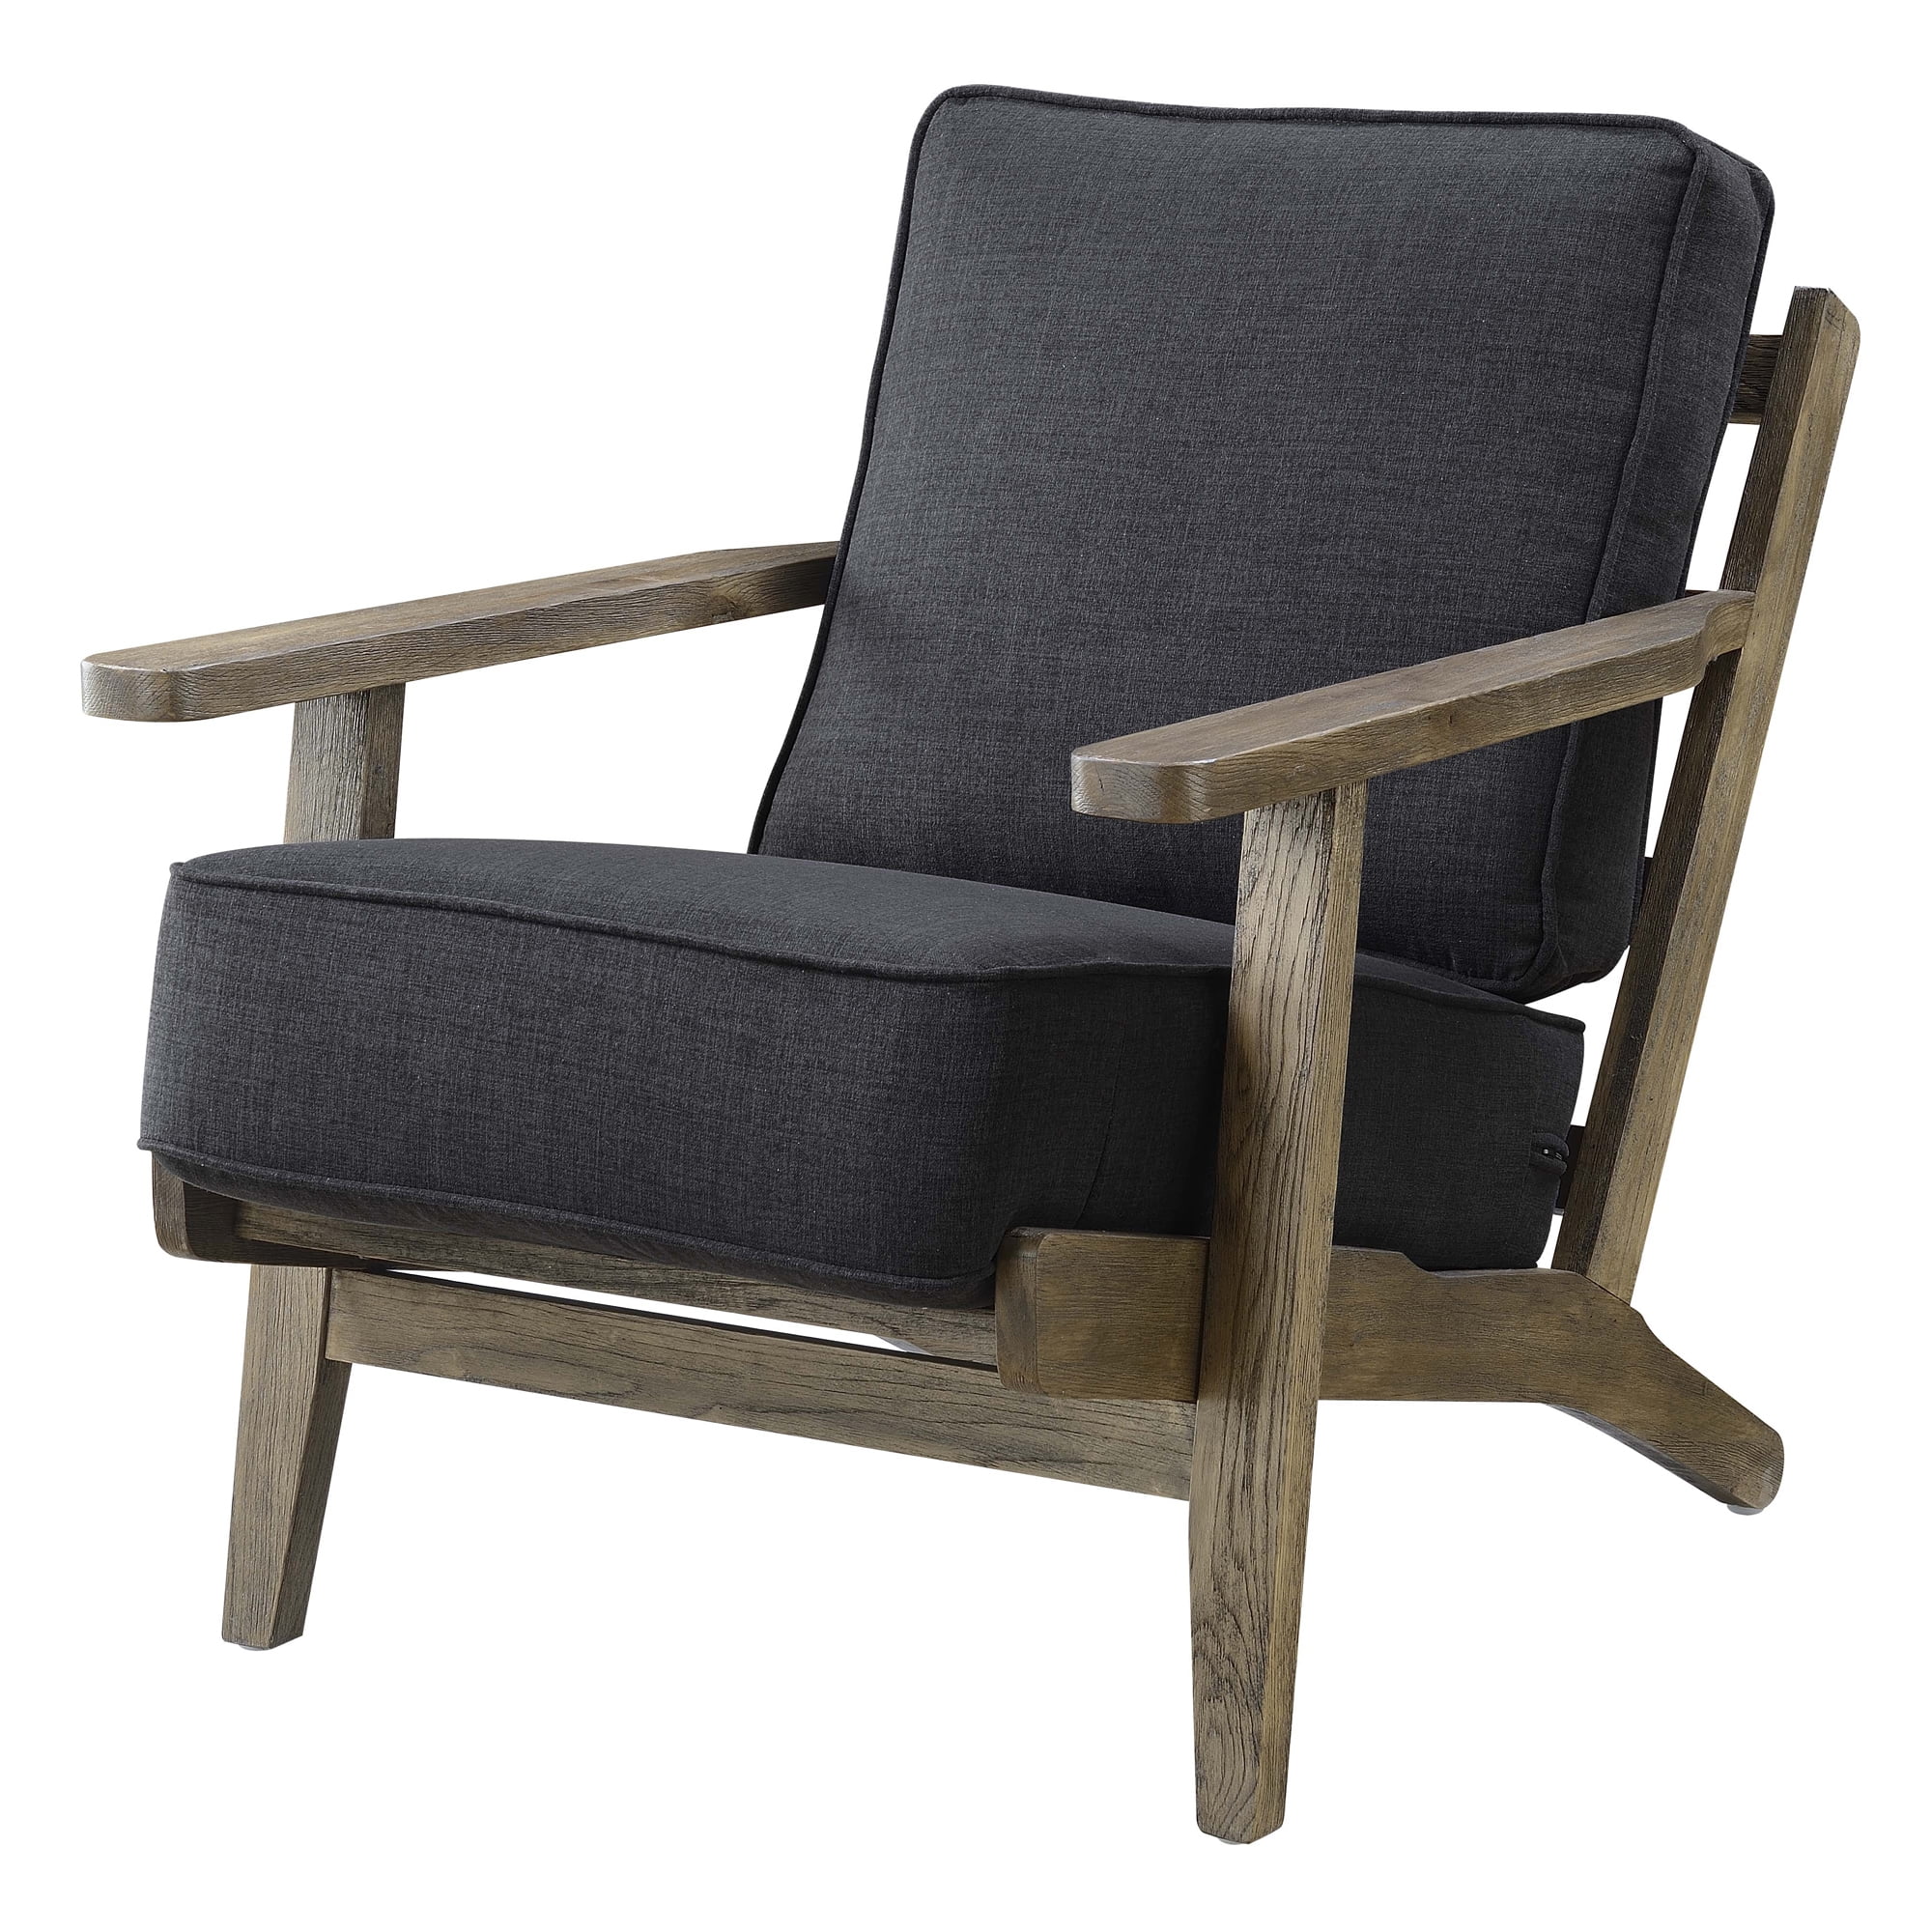 Chair legs. Apt2b - Jet Accent Chair. Clora Armchair & Reviews Joss & main. Clora Armchair. Contemporary Accent Chair.